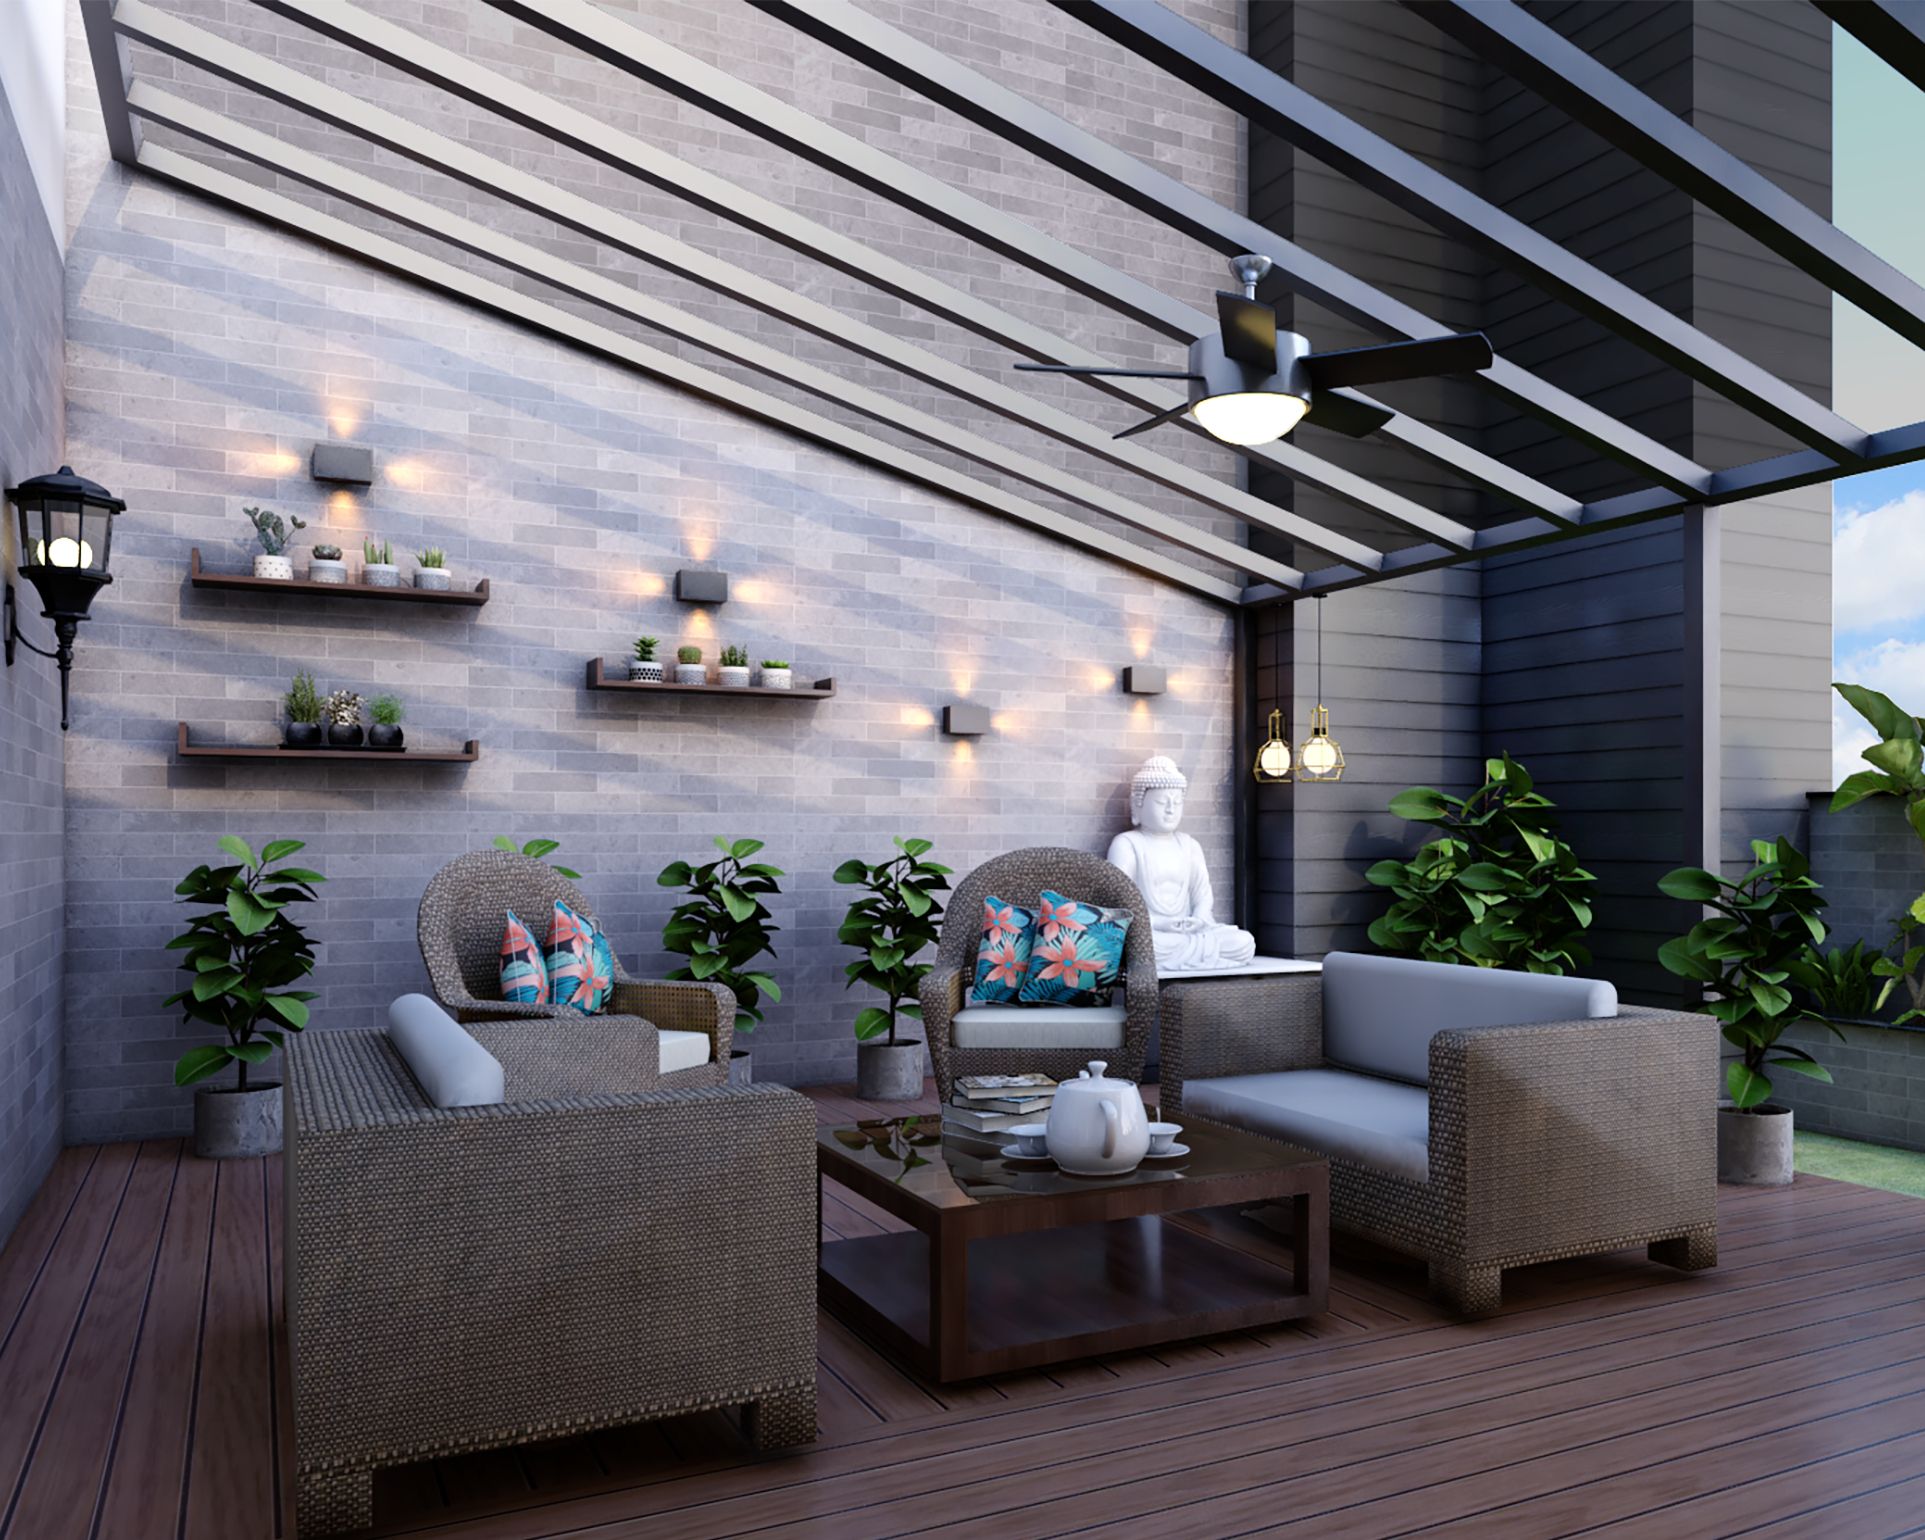 Contemporary Spacious Balcony Design with Shelves and Plants